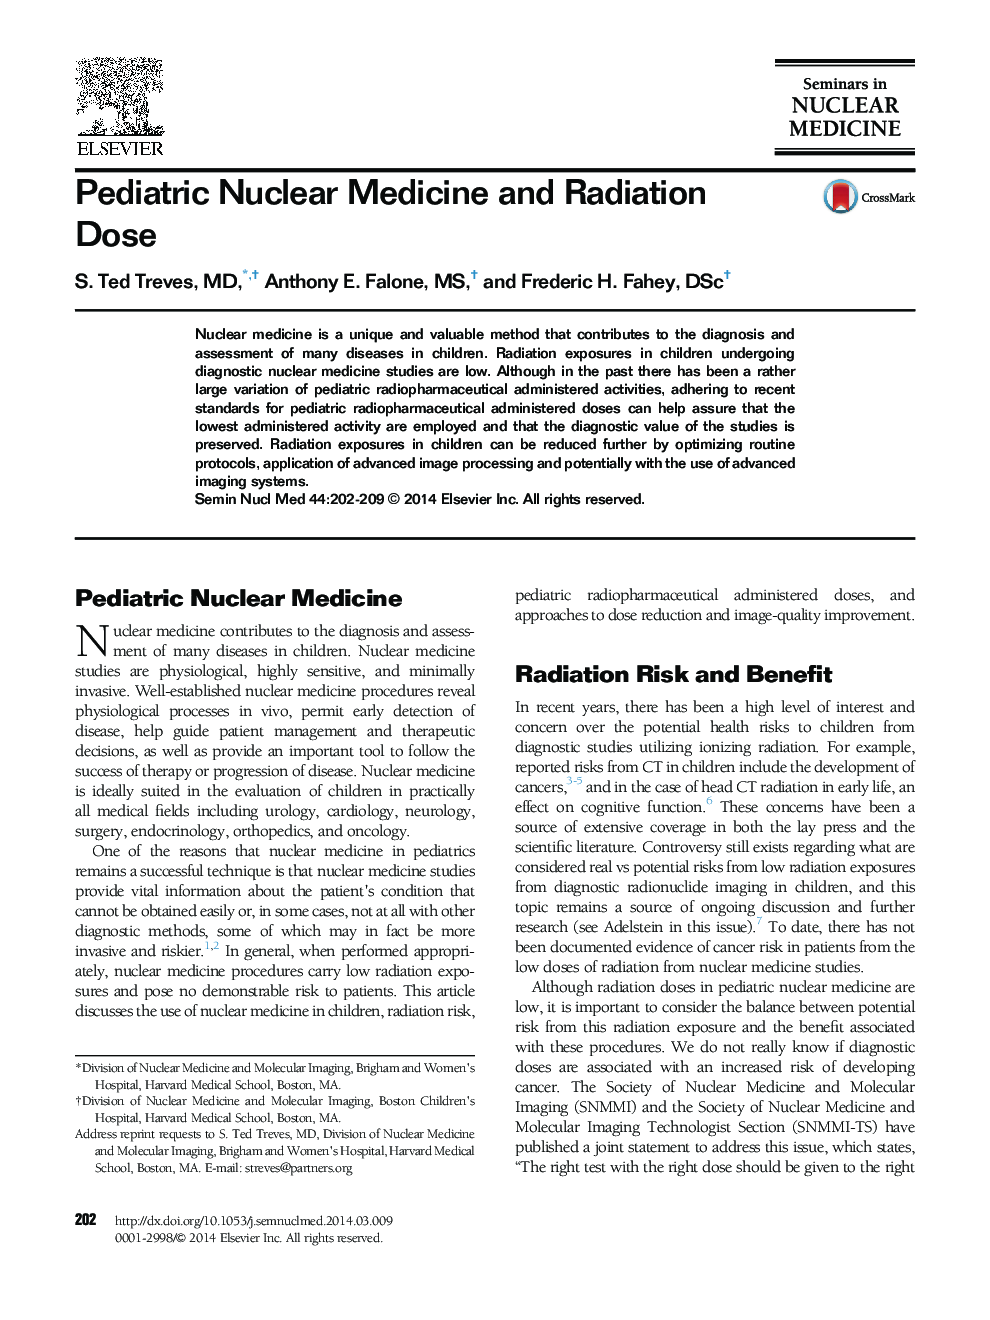 Pediatric Nuclear Medicine and Radiation Dose